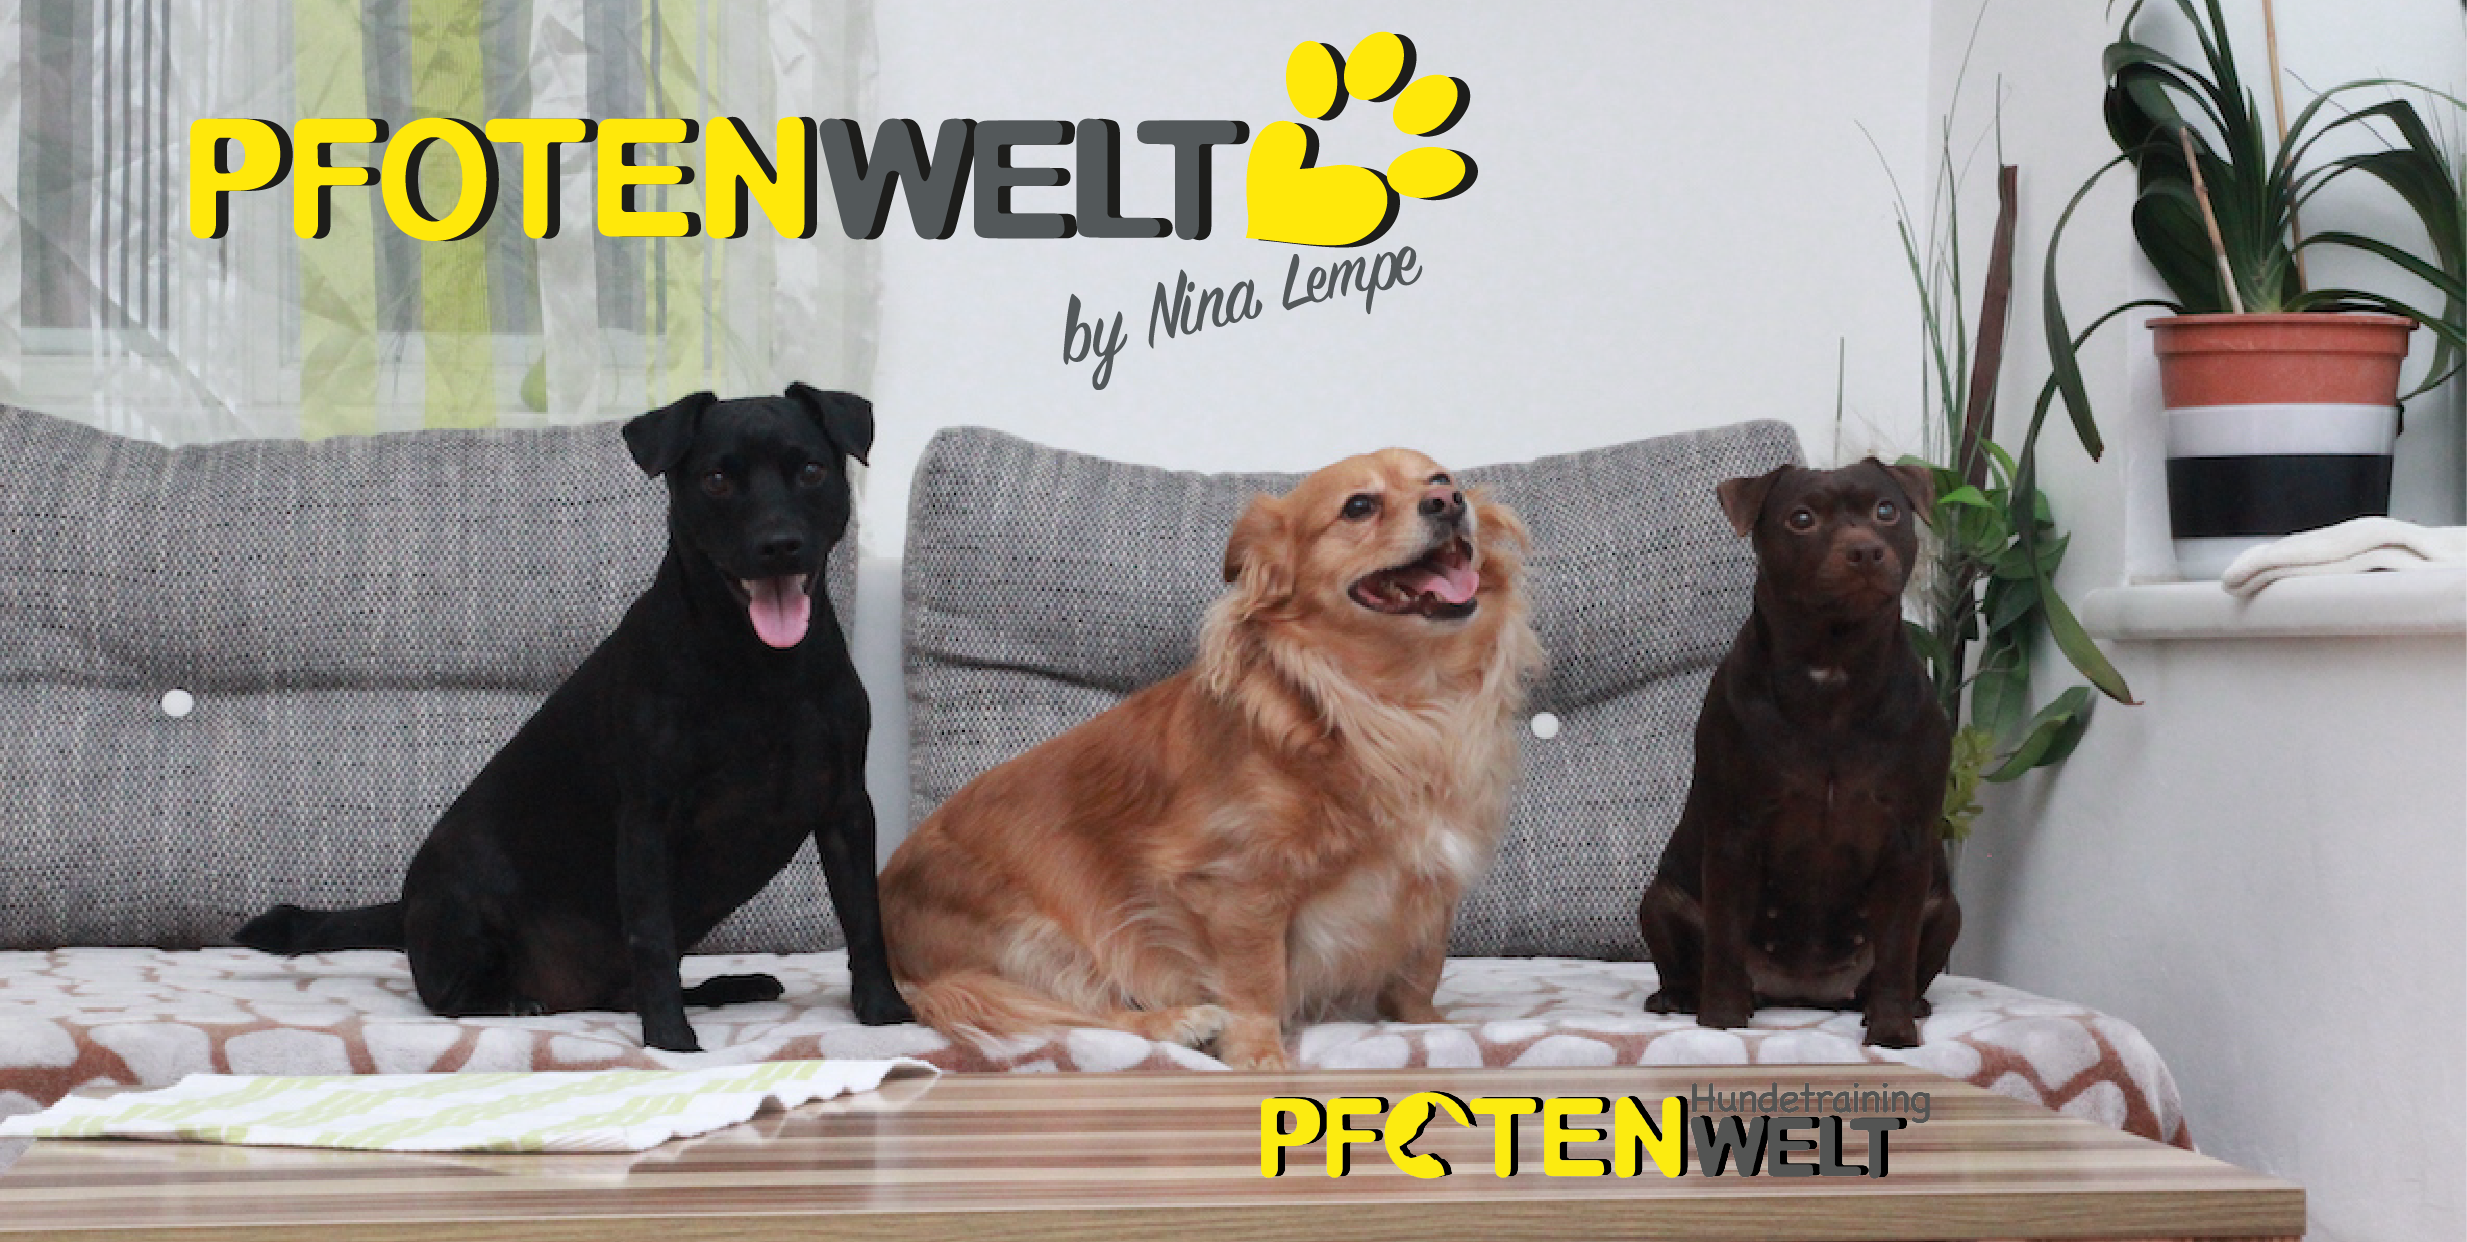 Pfotenwelt Nina Lempe-Hundetraining, Tierbetreuung, Workshops